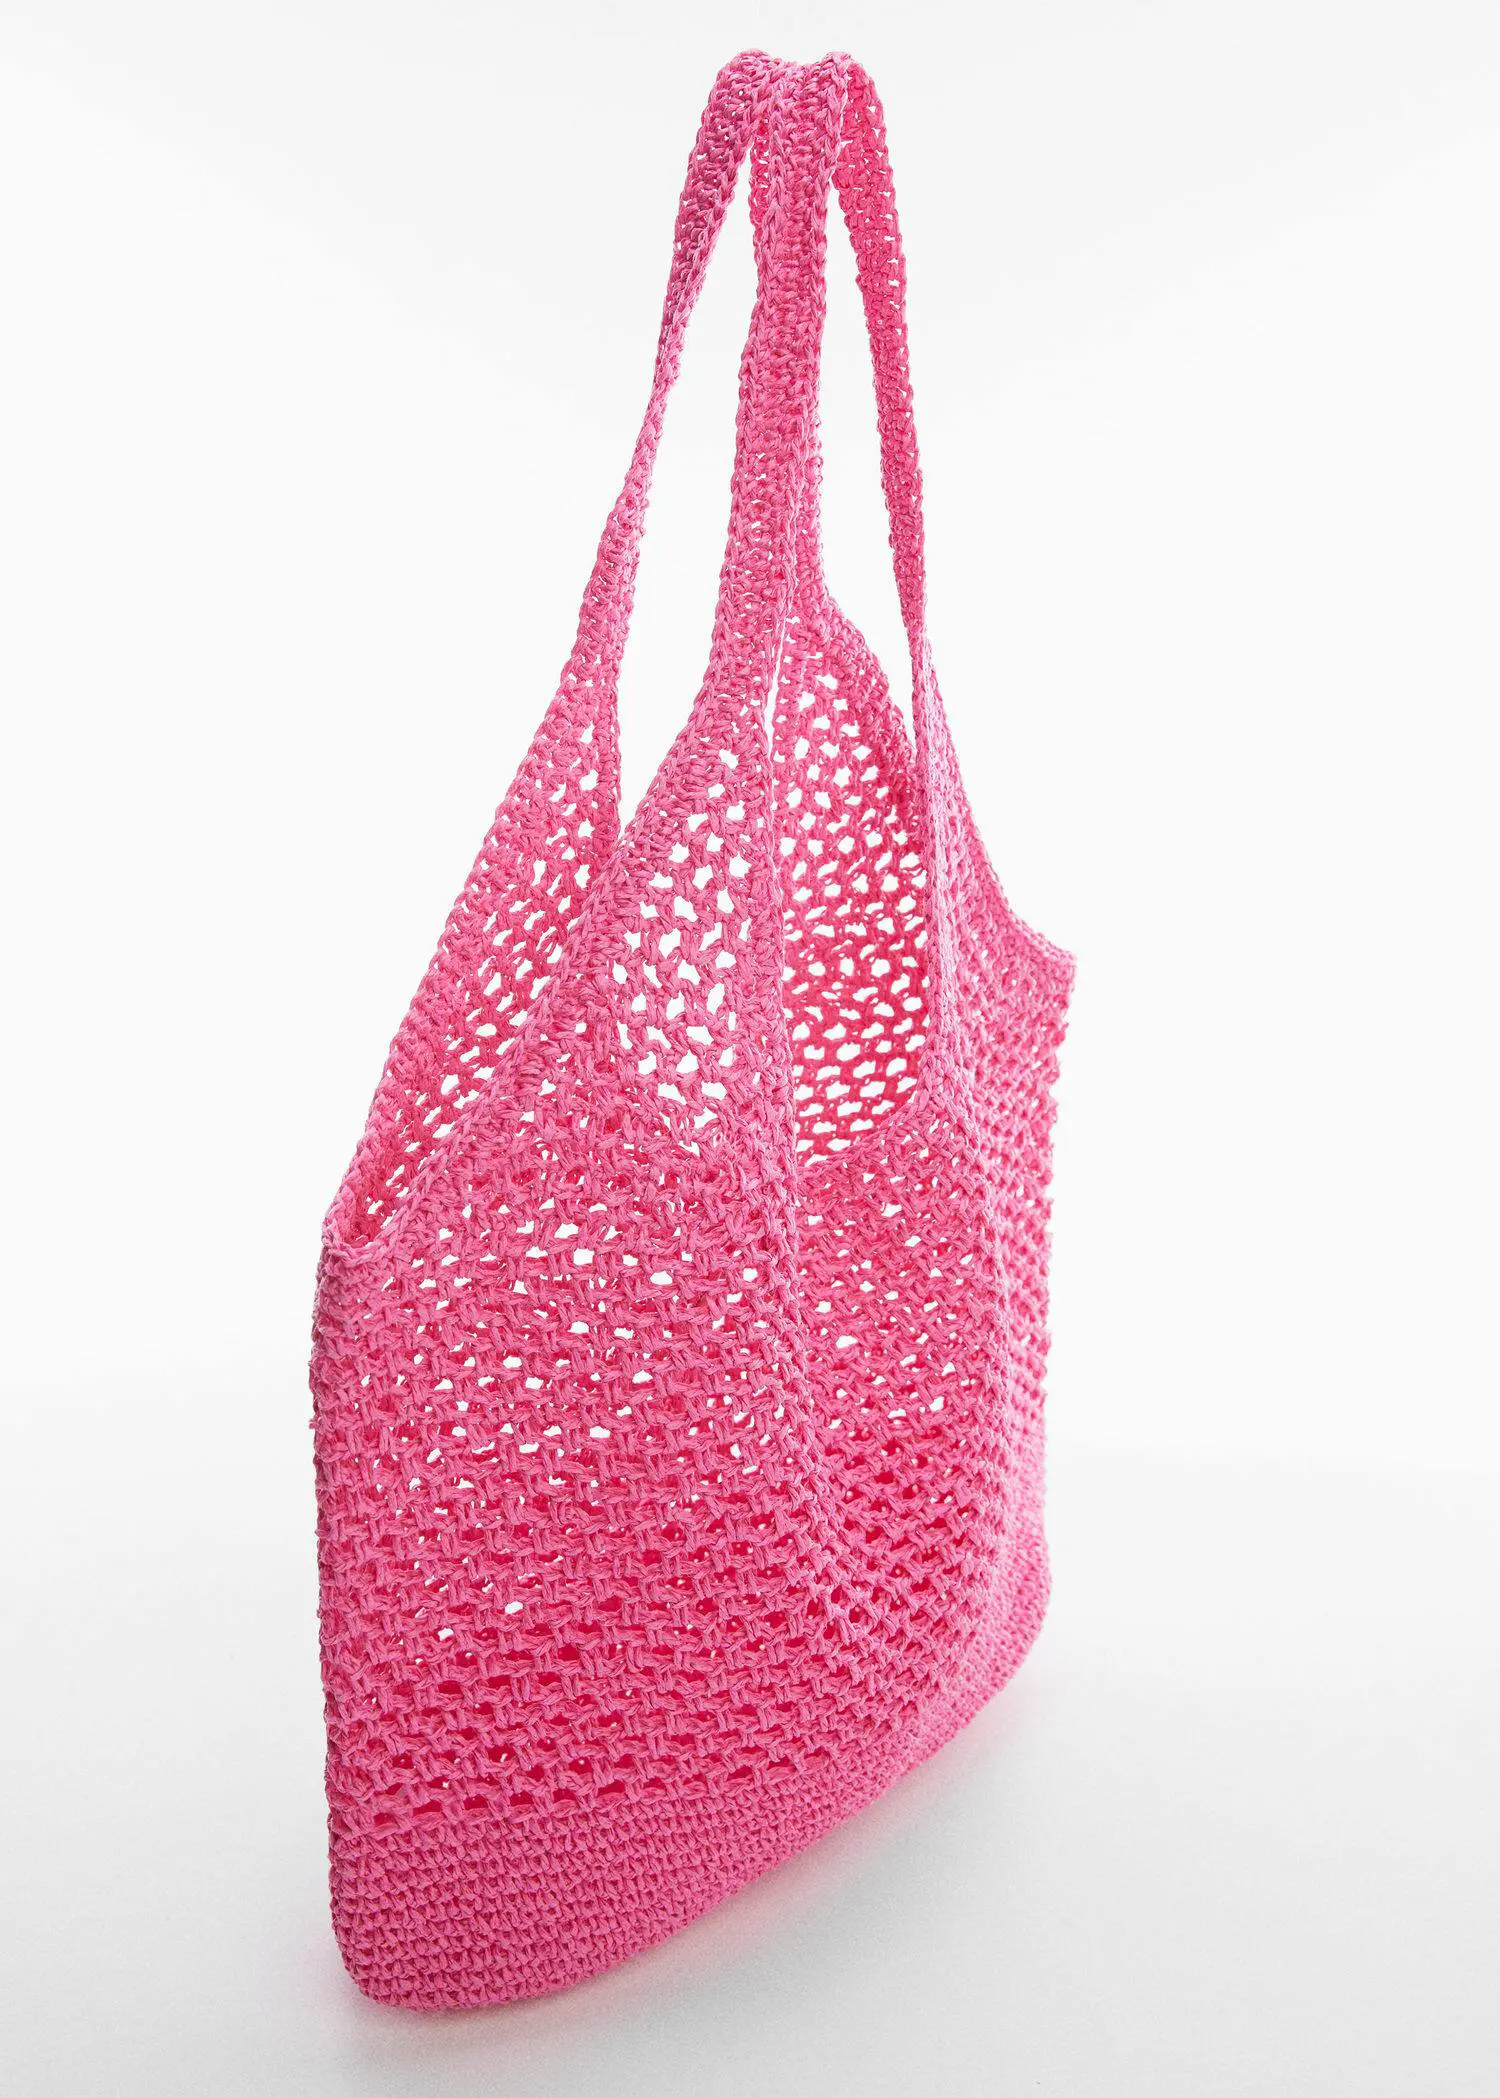 Mango Natural fiber sack bag. a close up of a pink crocheted bag. 